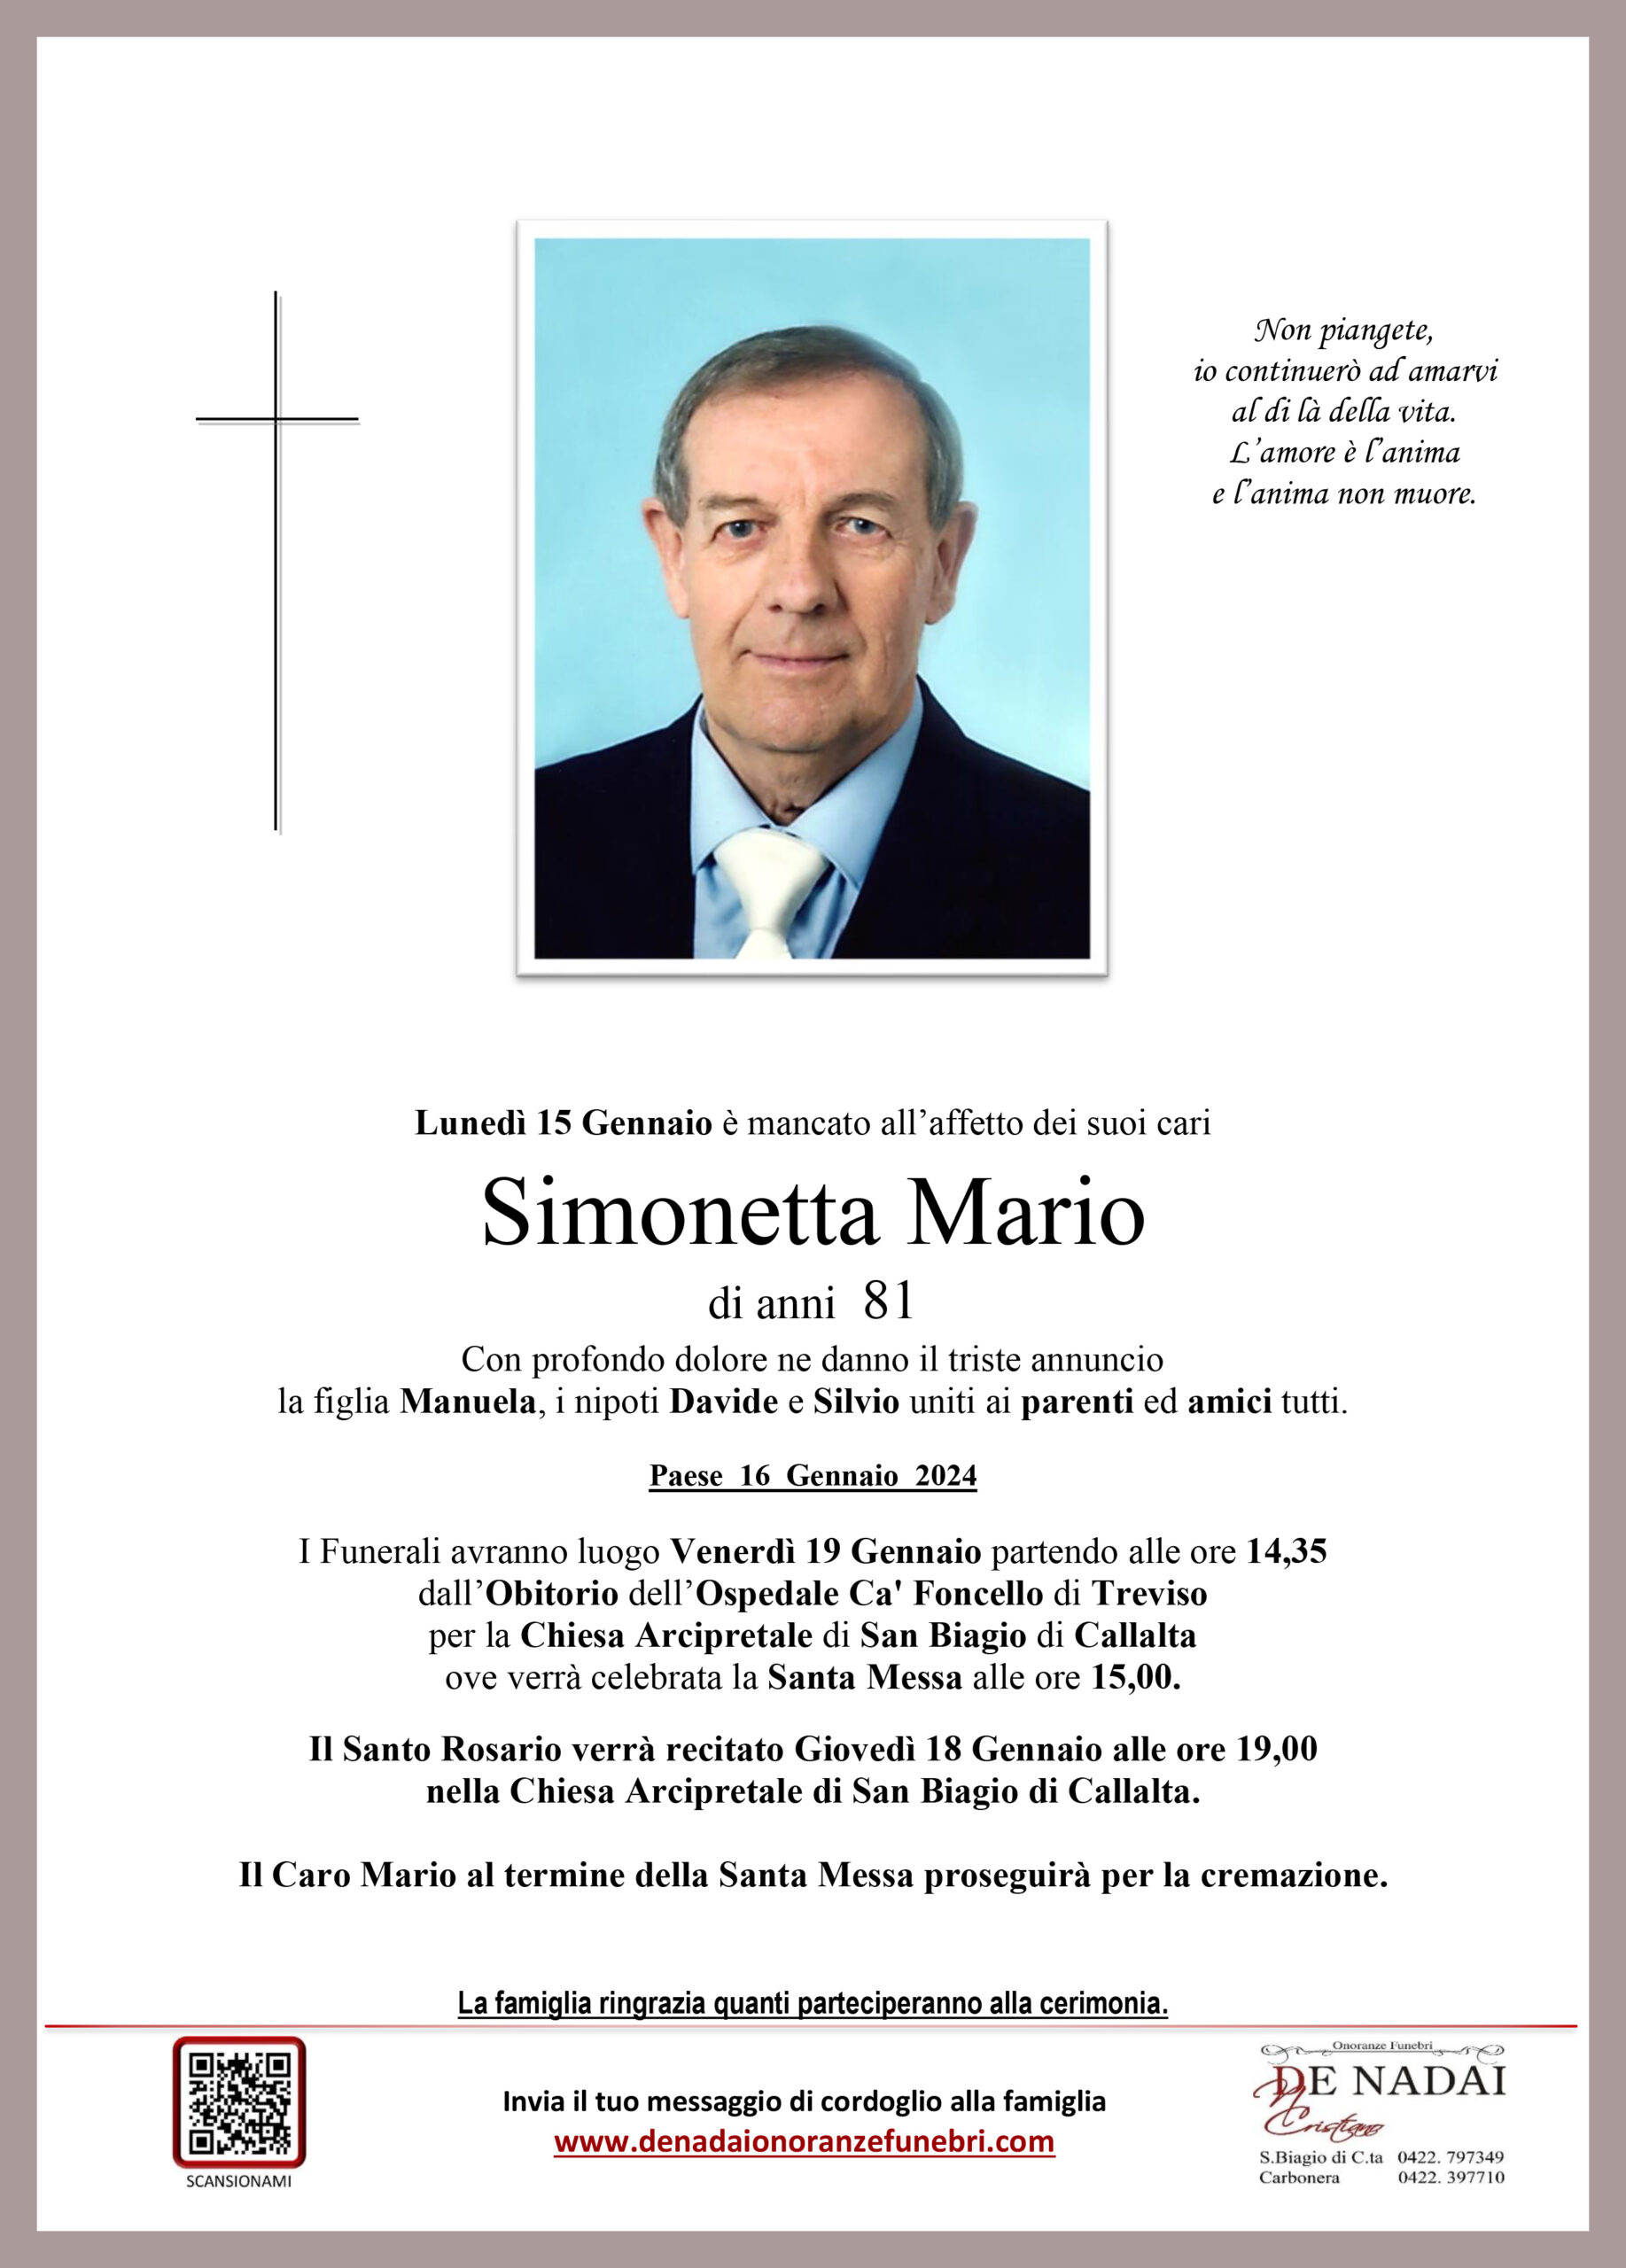 Simonetta Mario